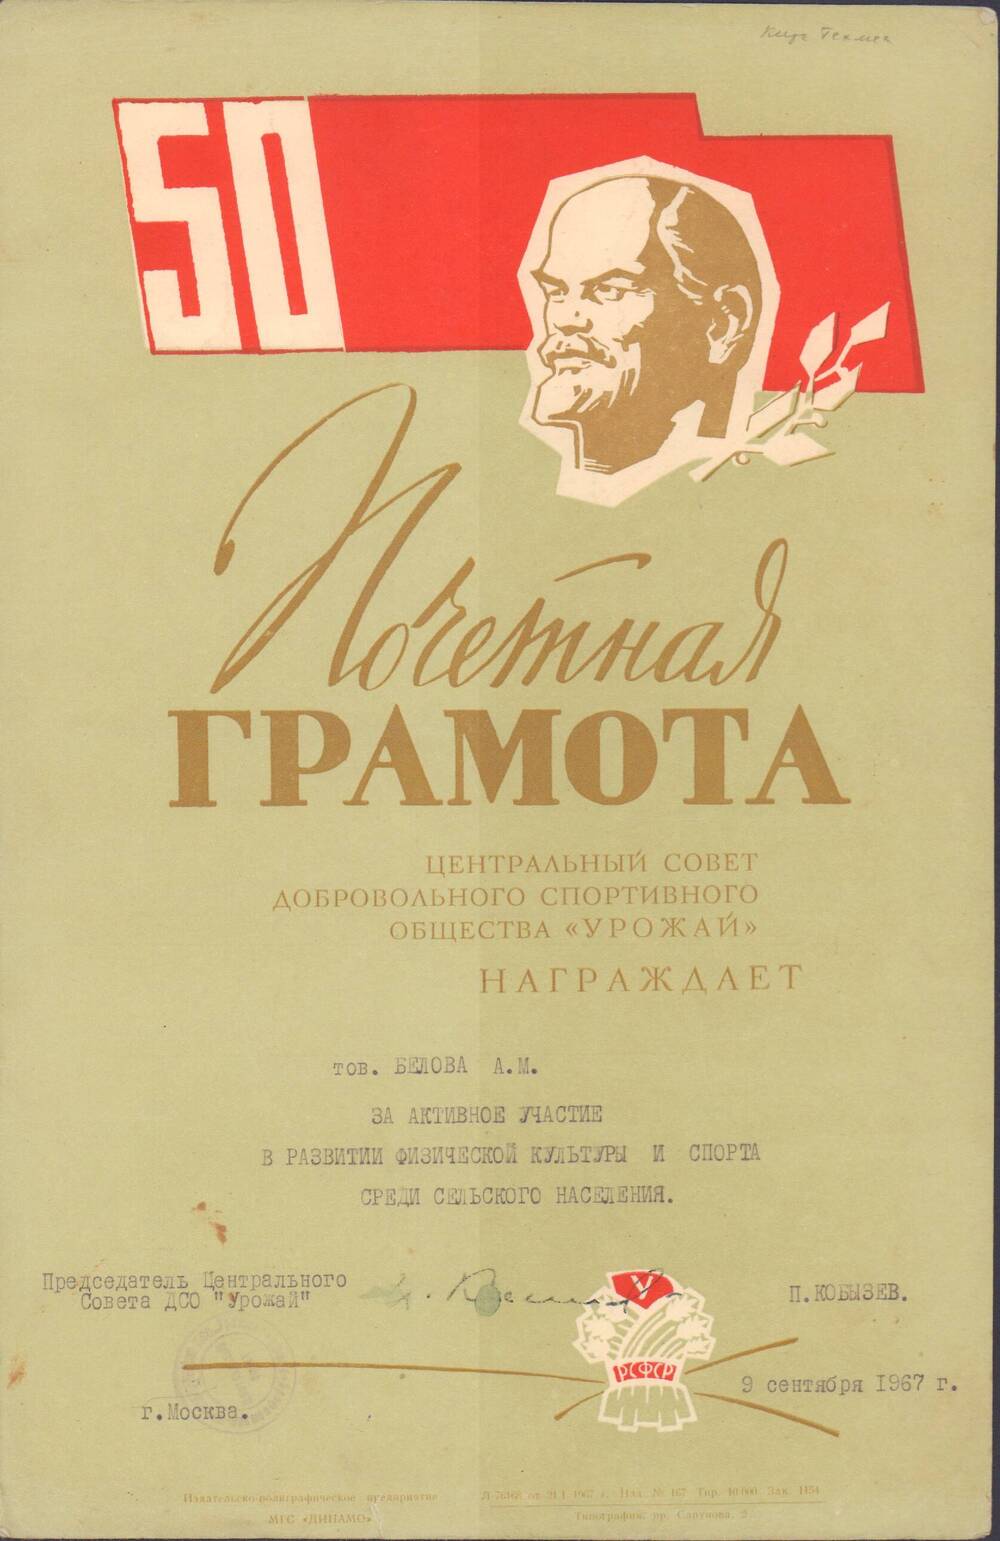 Почетная грамота Белову А.М., г.Москва, 9 сентября 1967 г